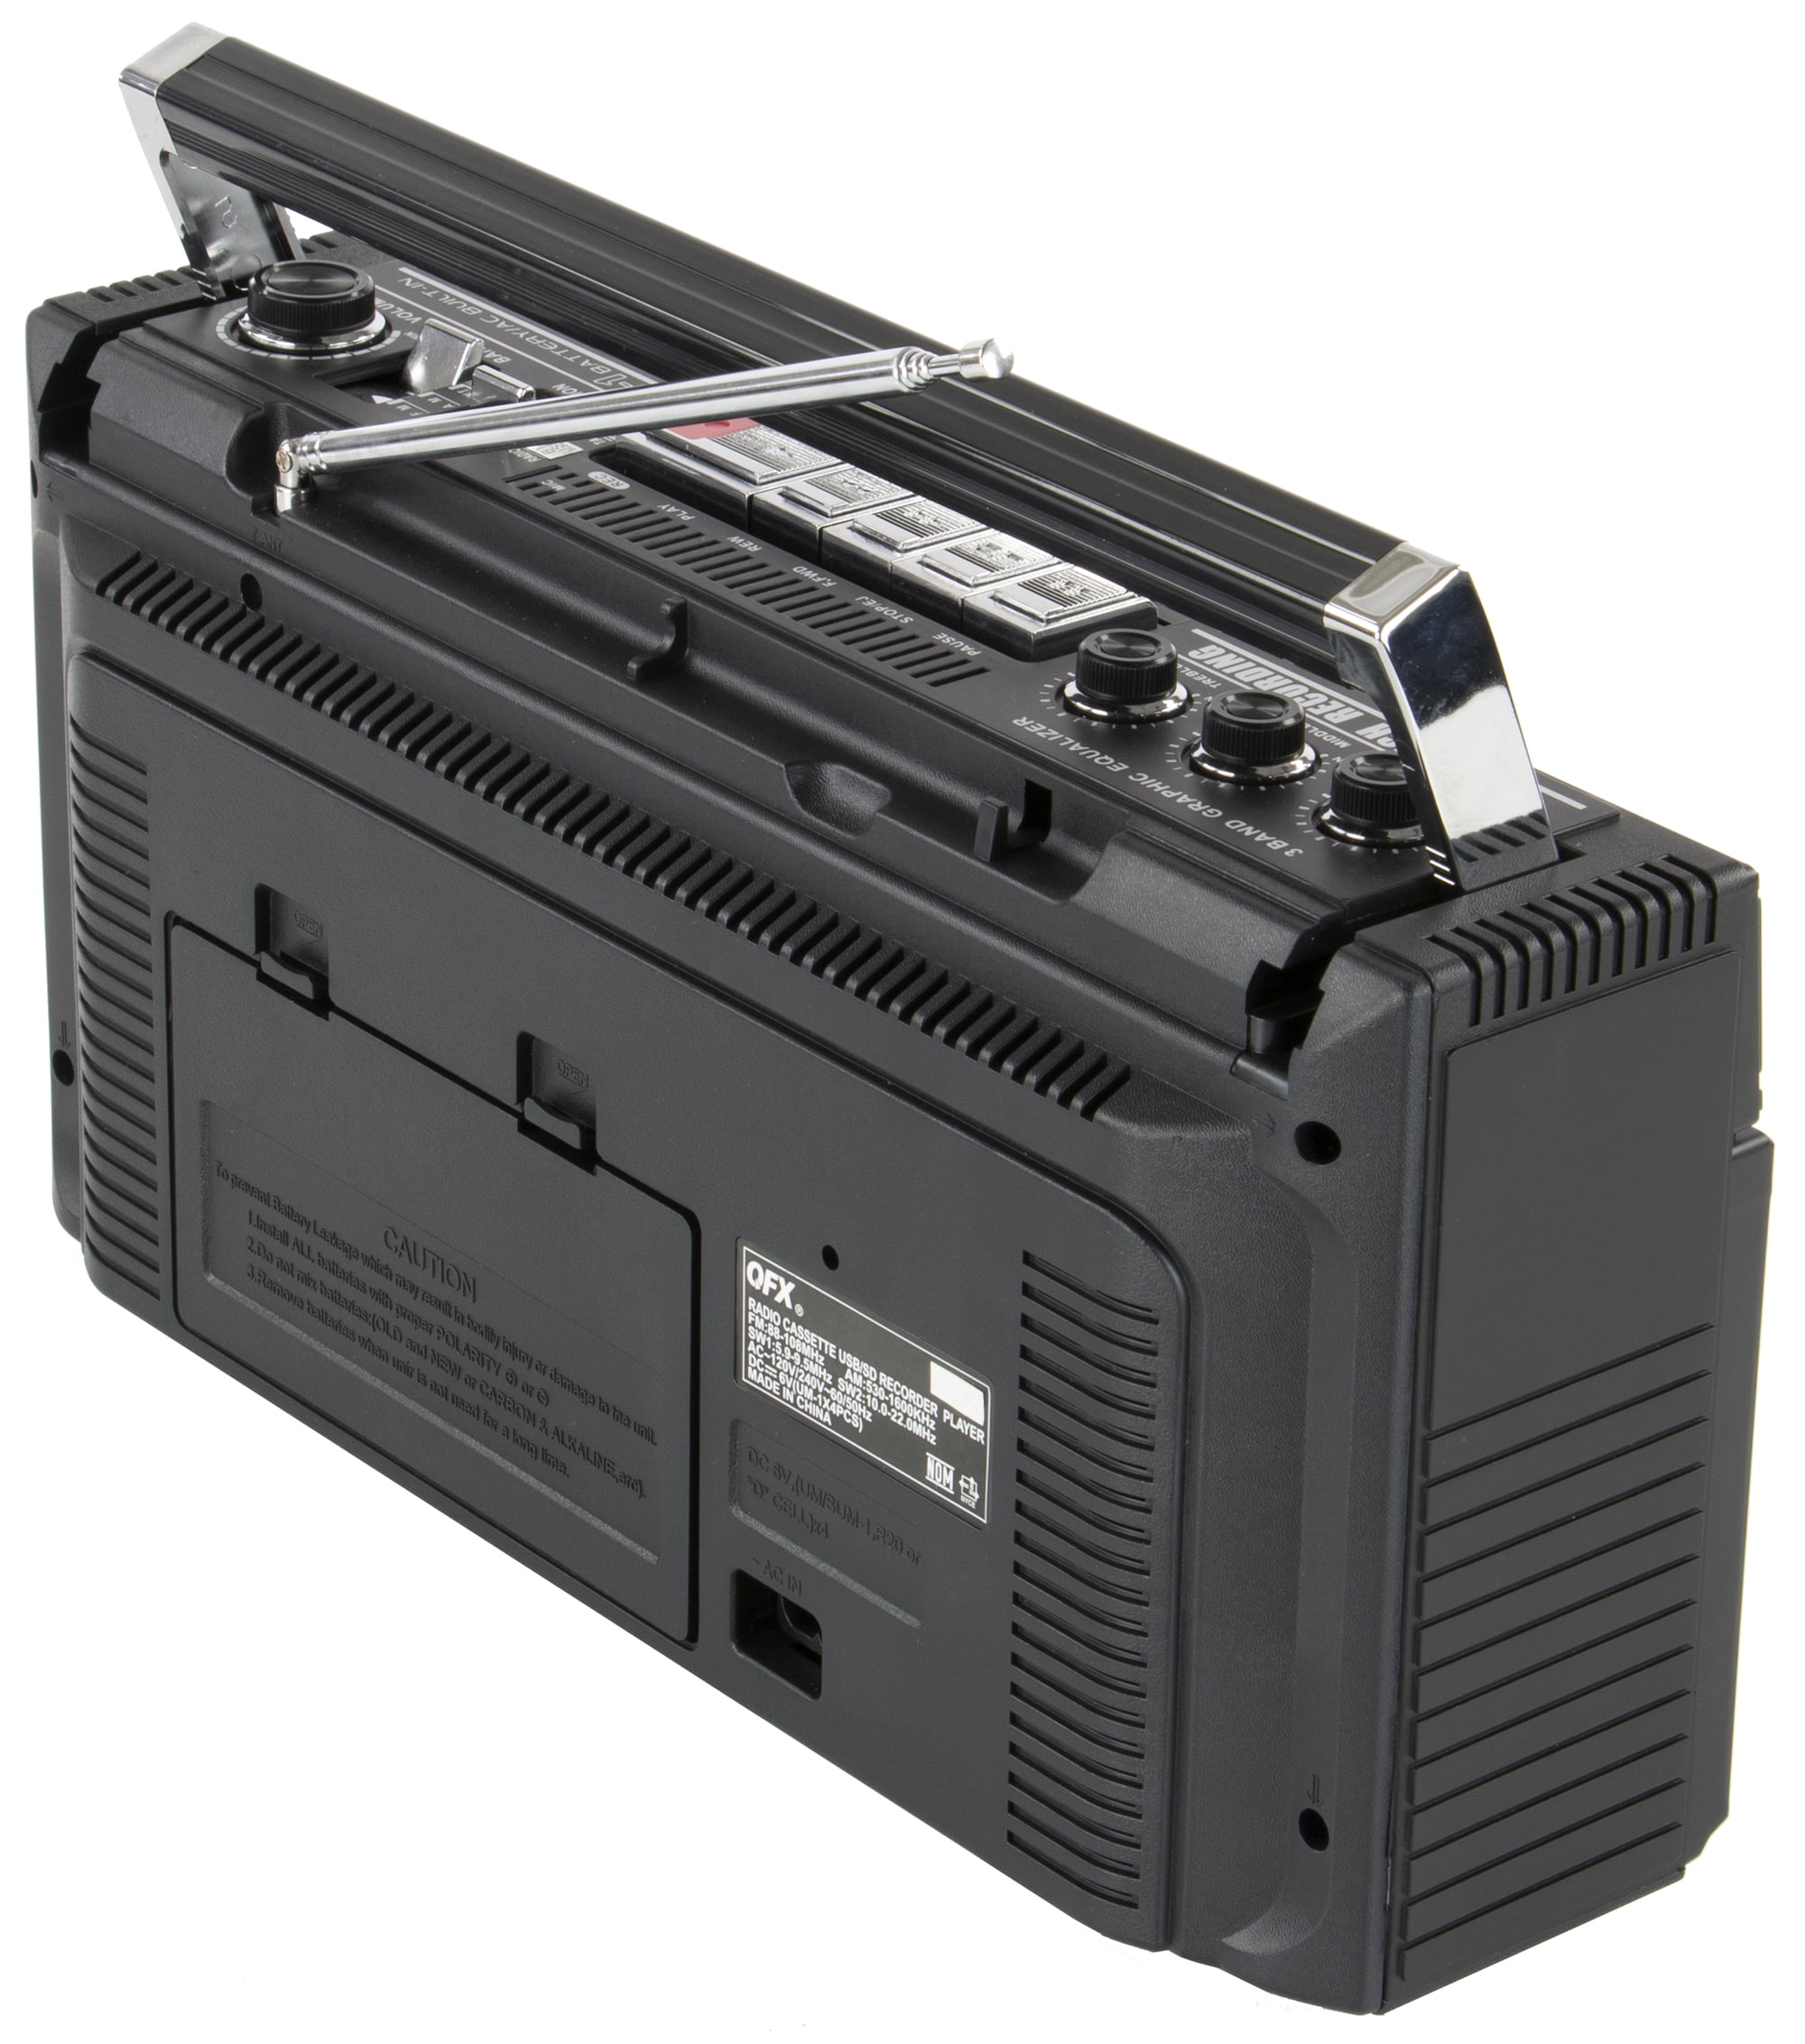 QFX Bluetooth Cassette/Radio Boombox, Black, J-220BT